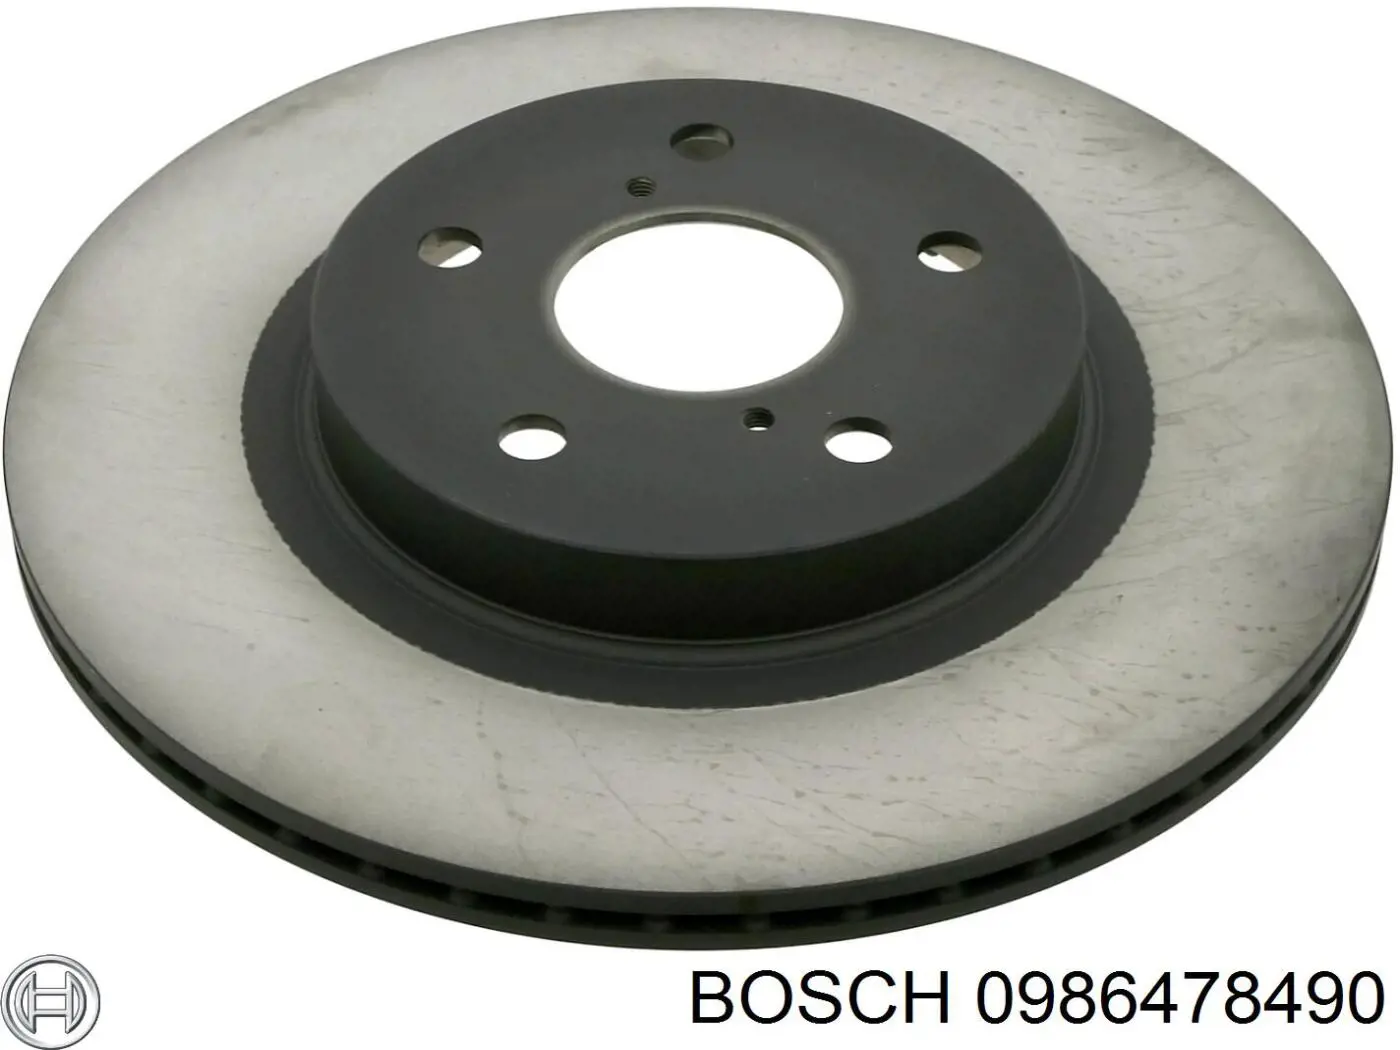 0986478490 Bosch disco de freno delantero